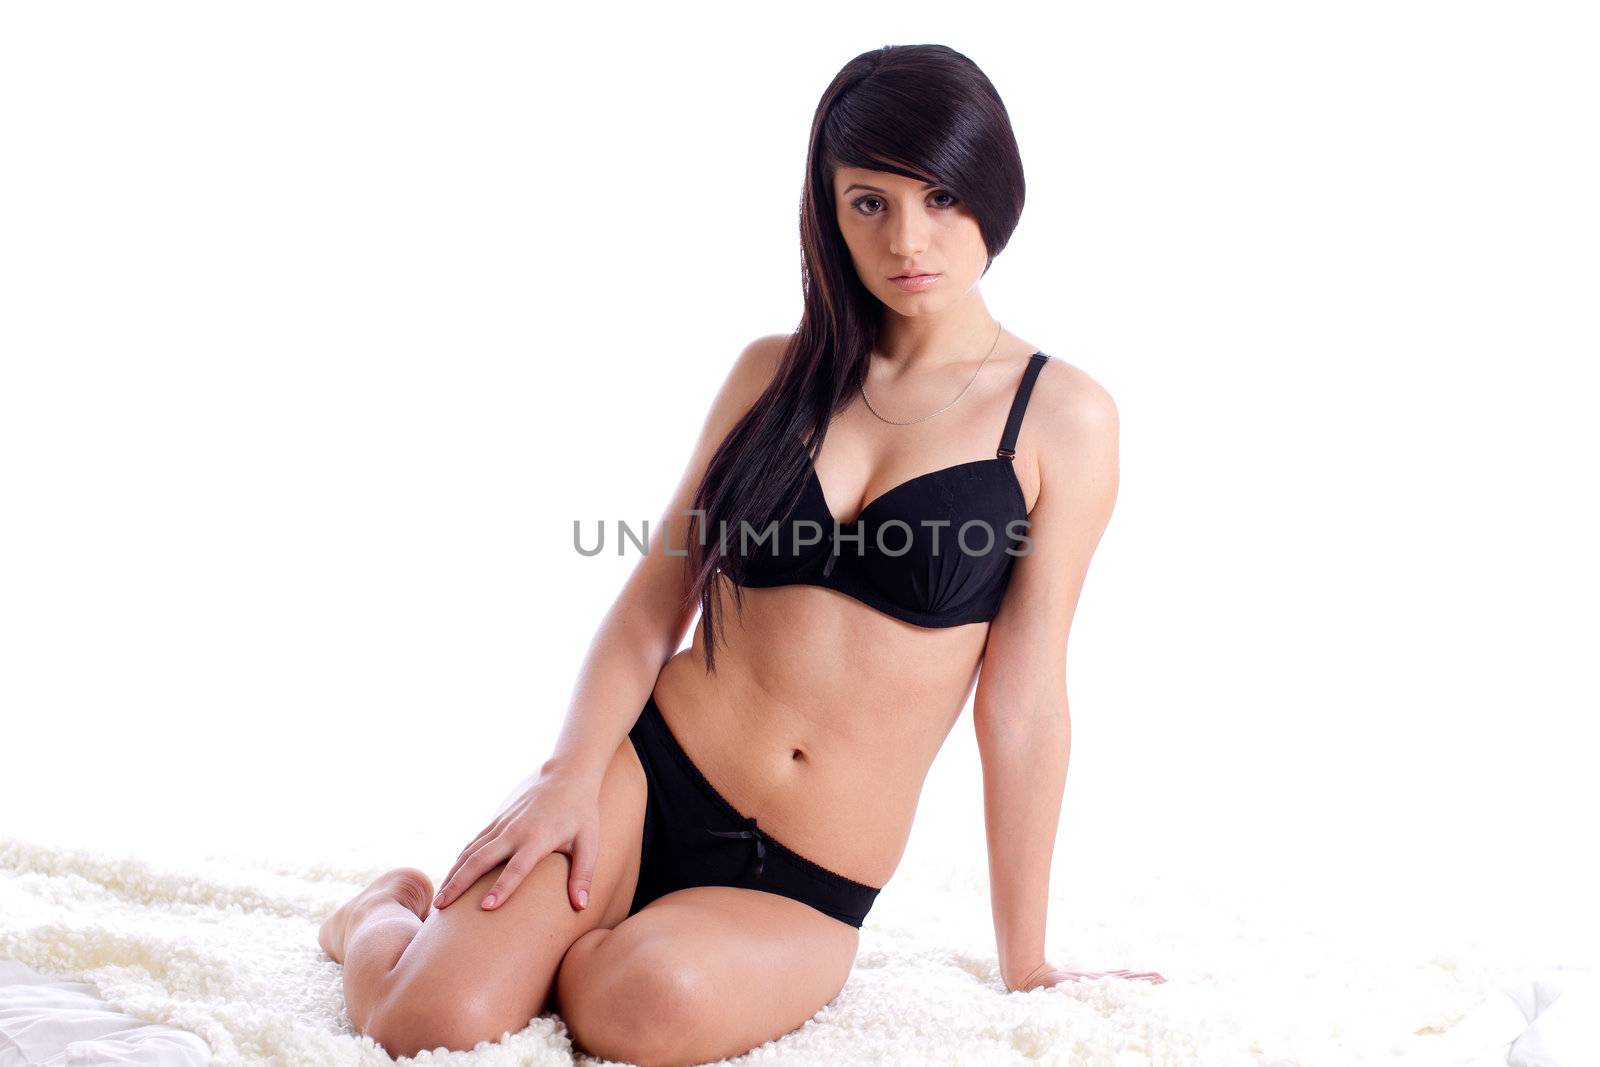 Beautiful fasion model in lingerie in bed by tpfeller